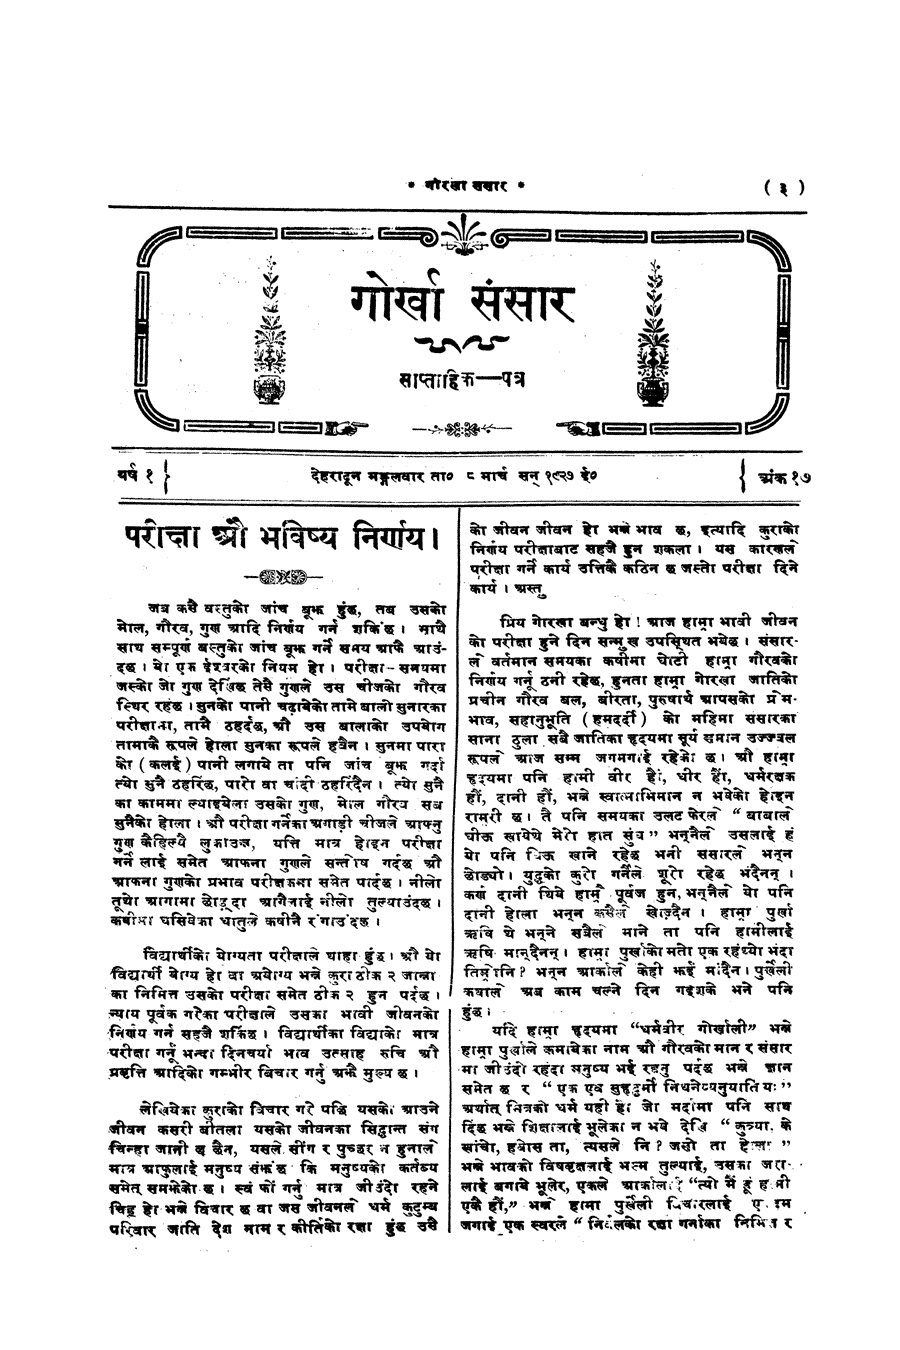 Gorkha Sansar, 8 Mar 1927, page 3